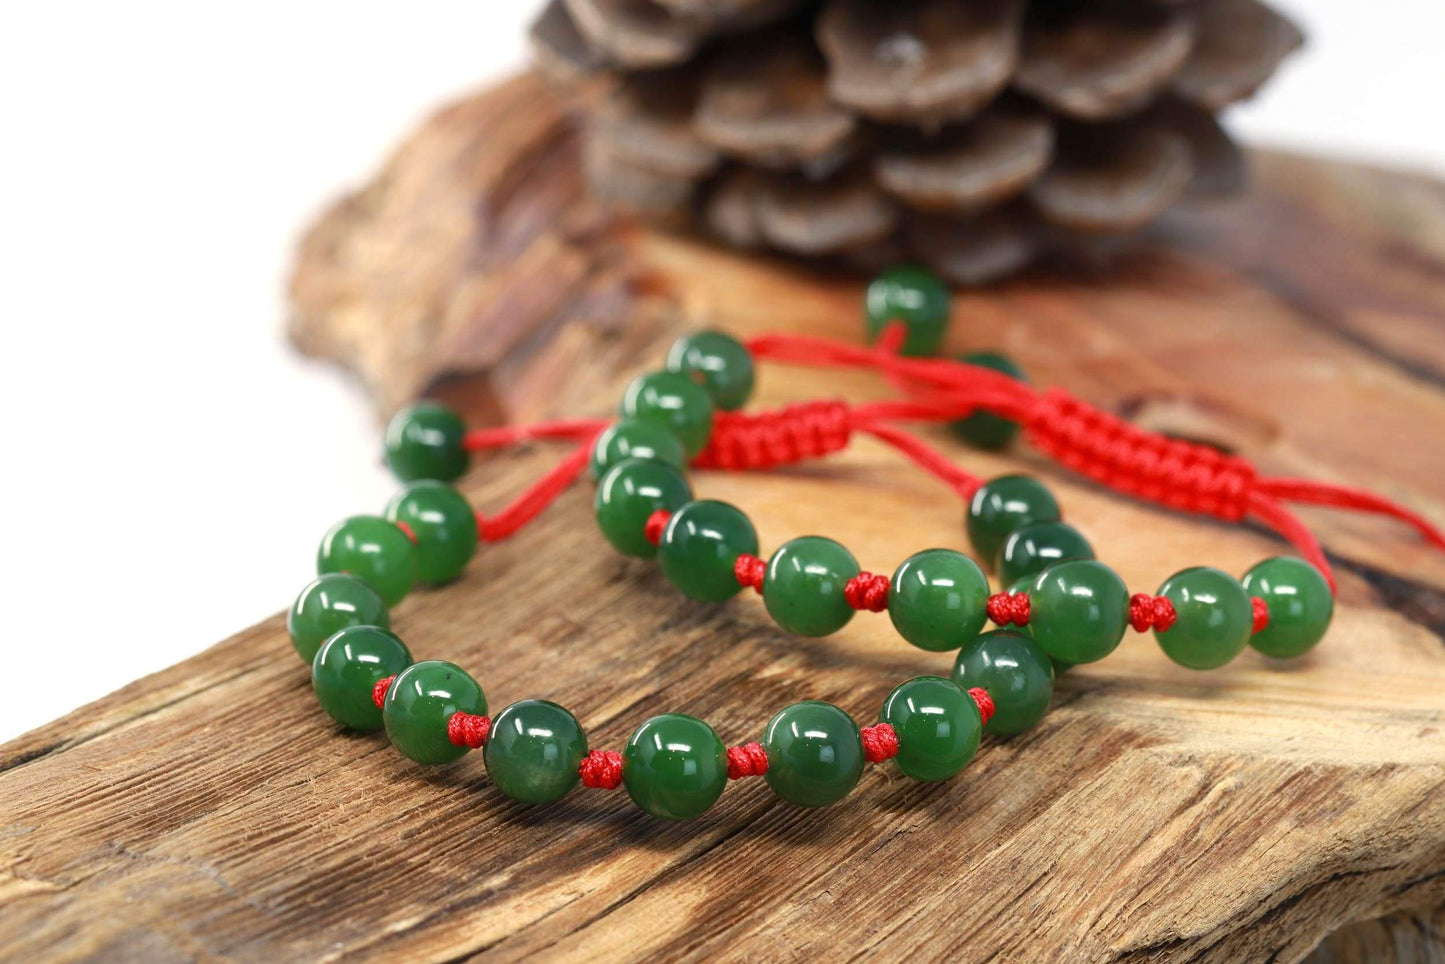 RealJade® Natural Nephrite Jade Bead Bracelet With Red String